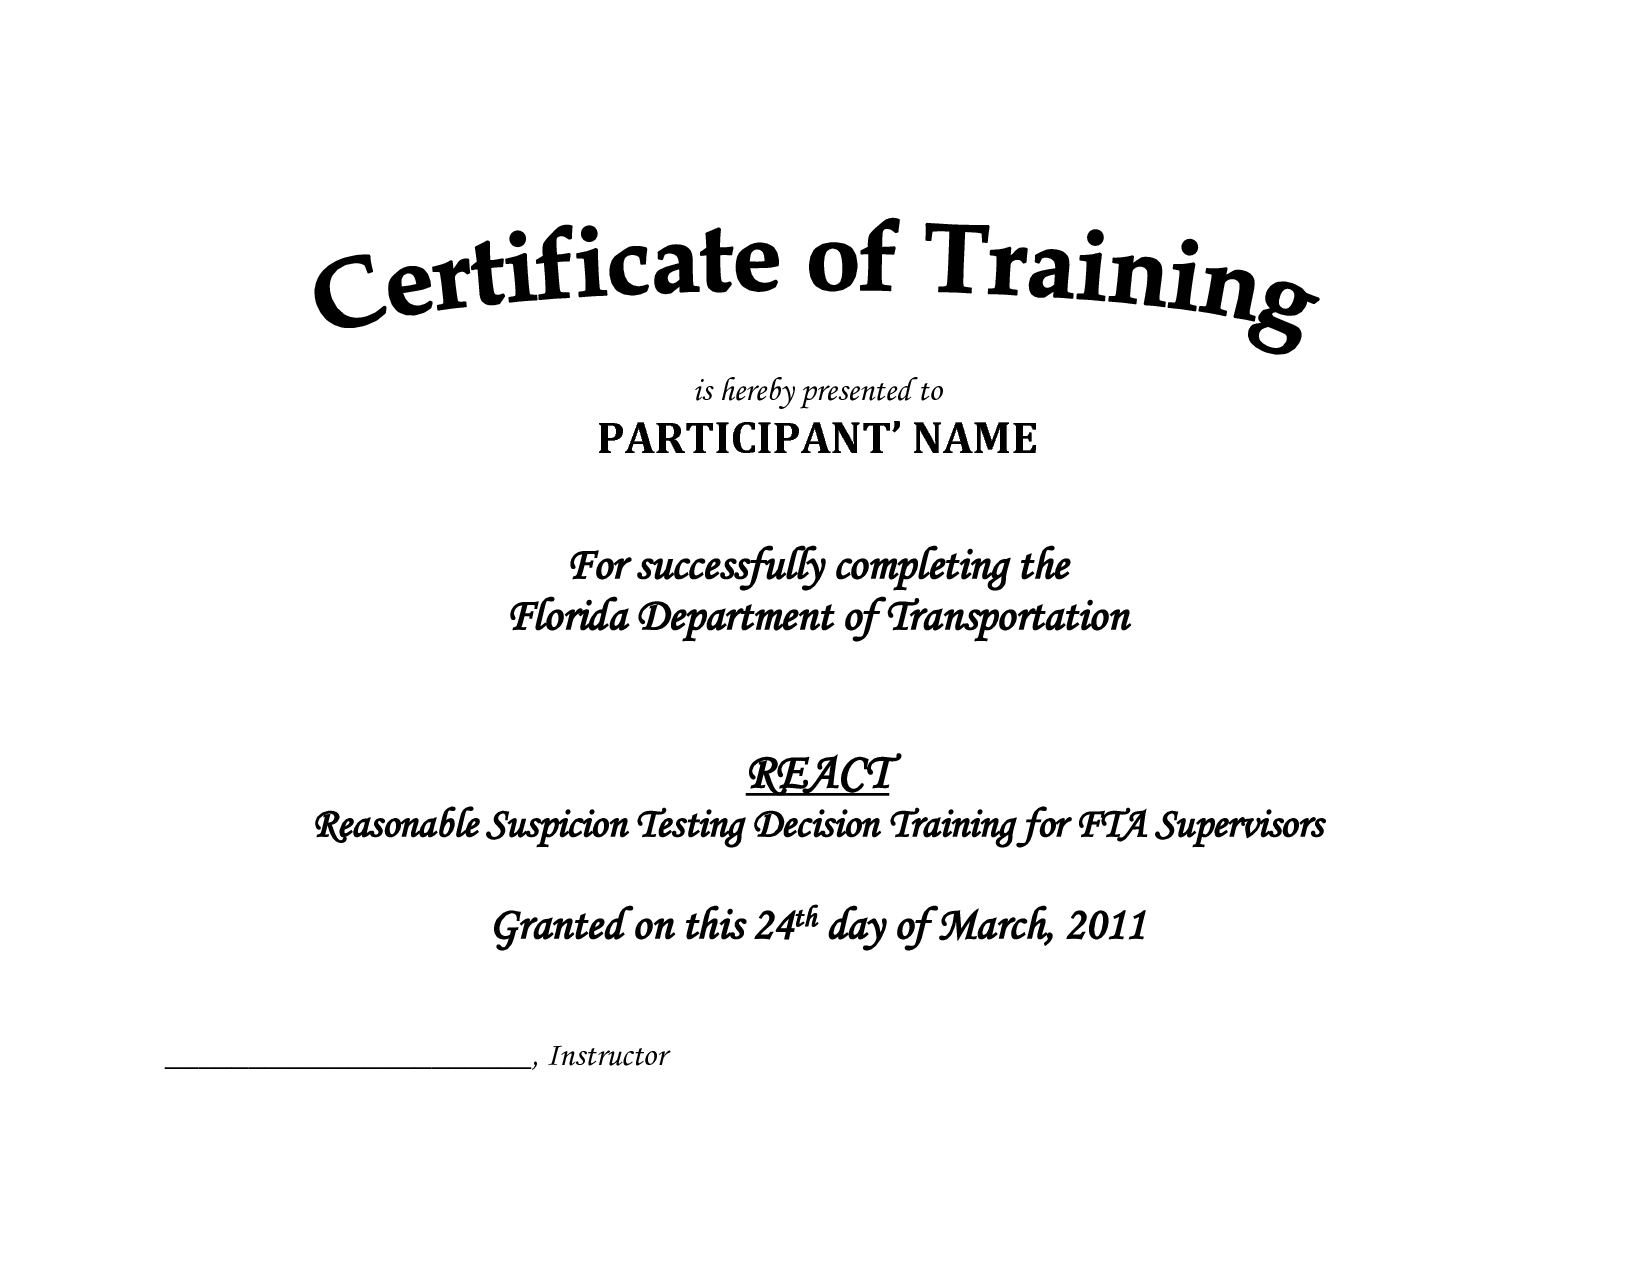 Training Certificate Template Pdf | Blank Certificates Within Birth Certificate Template For Microsoft Word